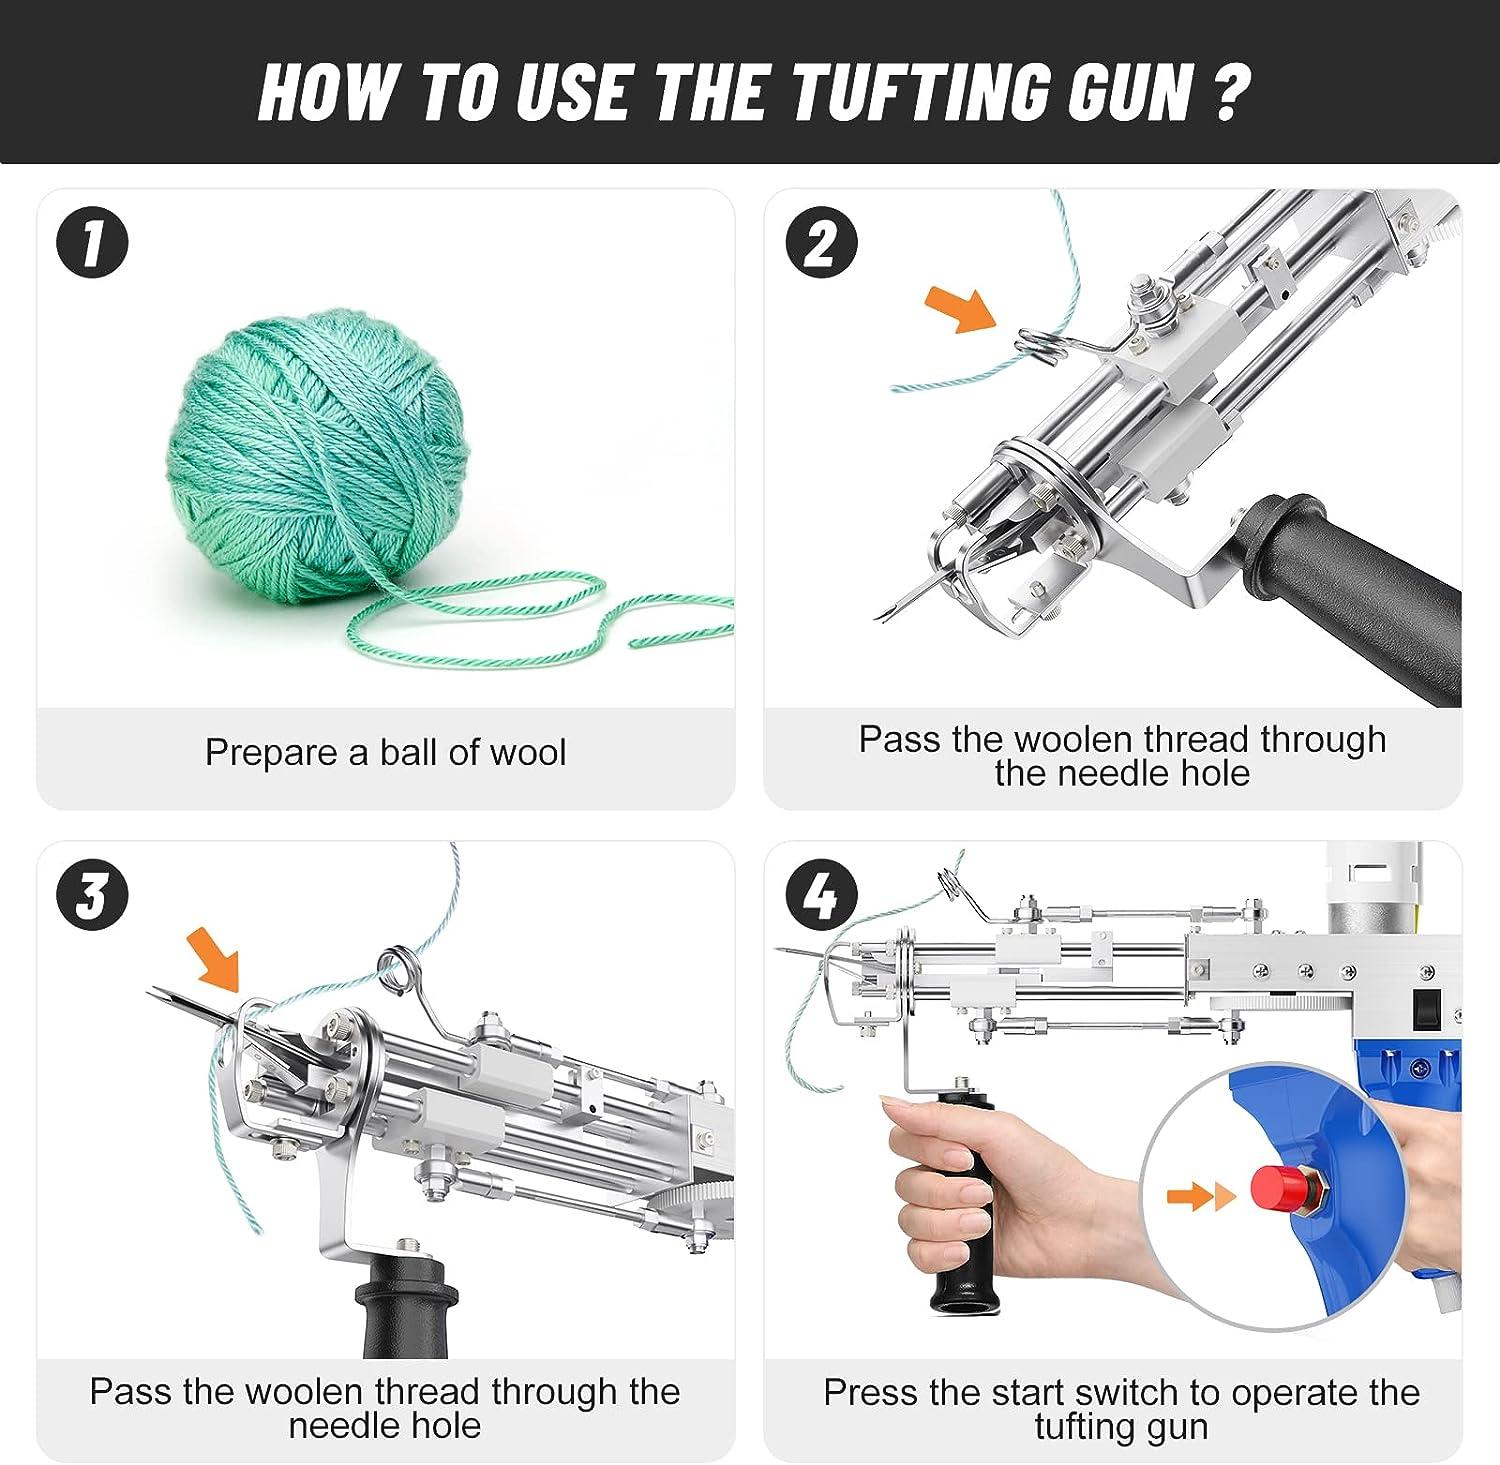  Kacsoo Cut Pile Tufting Gun, Electric Rug Tufting Gun,Handheld  Knitting Rug Gun(Blue Cut Pile),Gift for DIY, with 5-40 Stitches/Sec  100V-240V